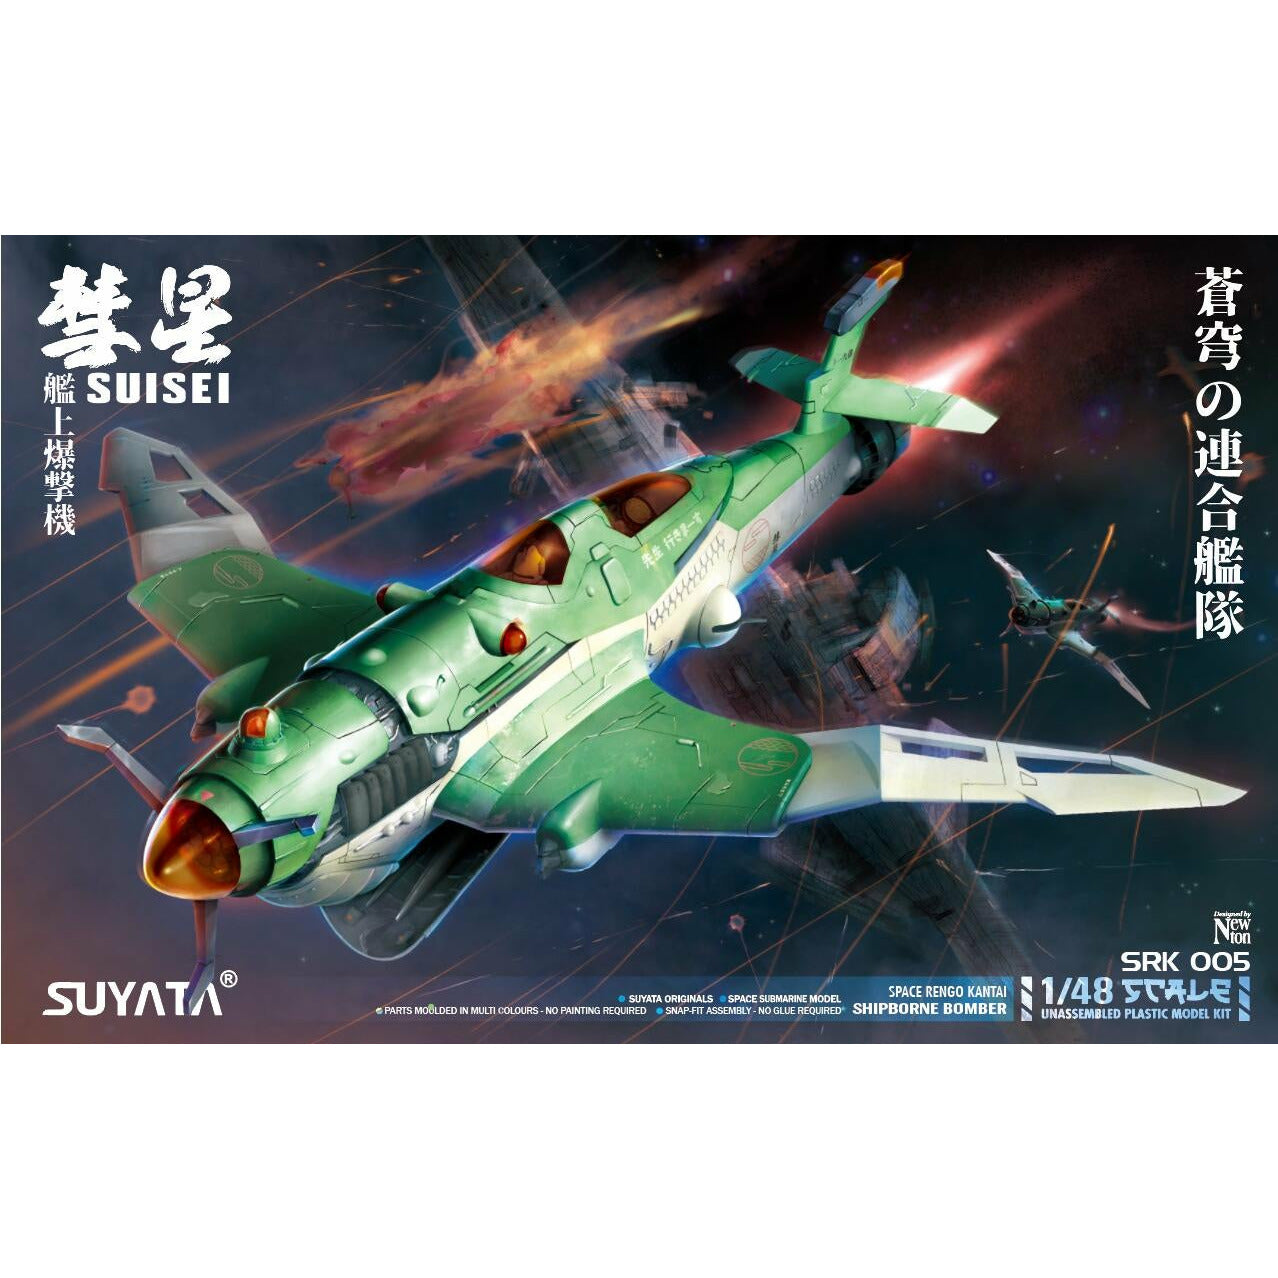 Suisei Shipborne Bomber 1/48 Science Fiction Model Kit #SRK005 by Suyata